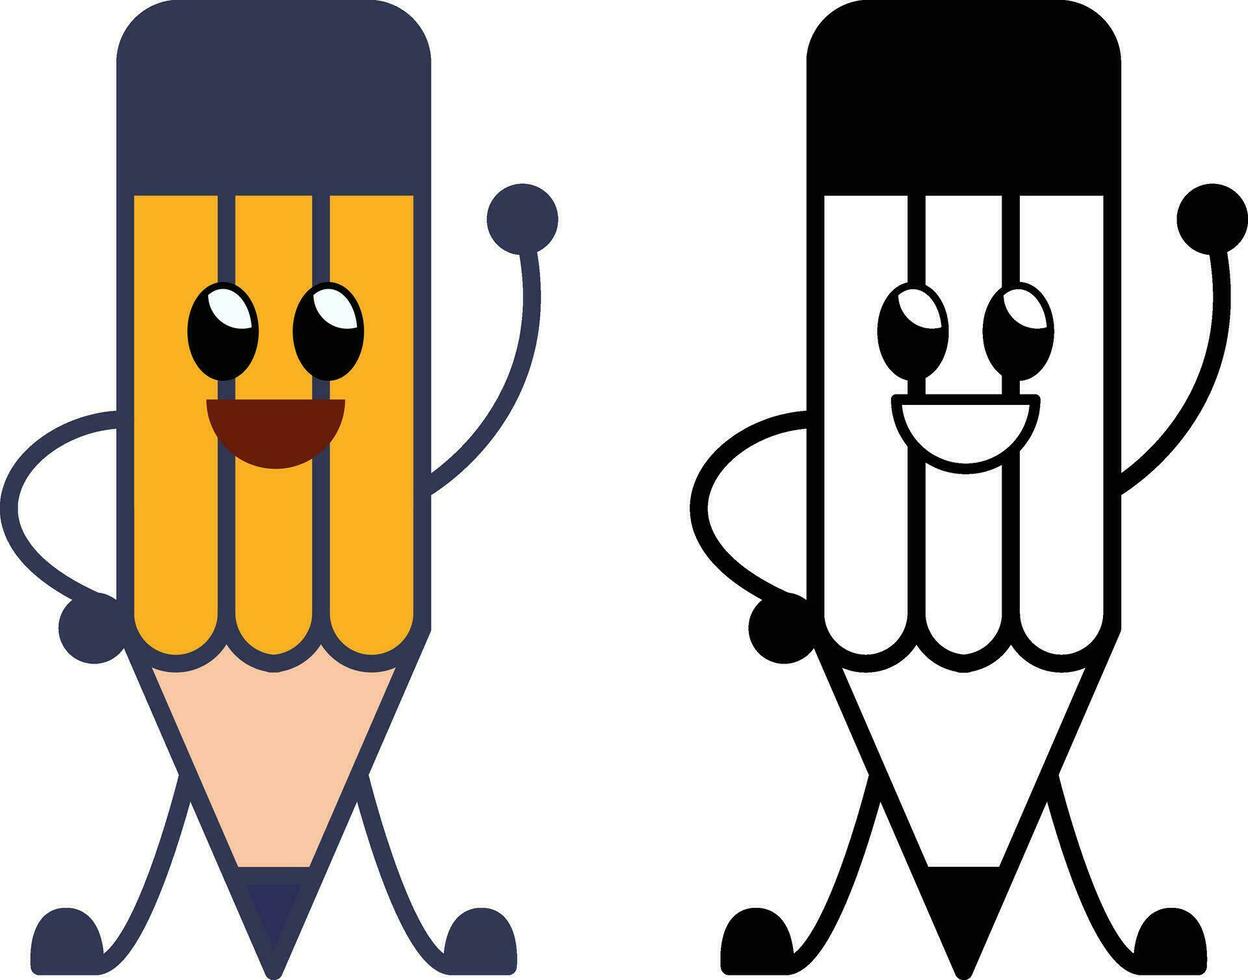 Pencil character waving cartoon vector illustration, cartoon pencil mascot, colored and black and white line art stock vector image